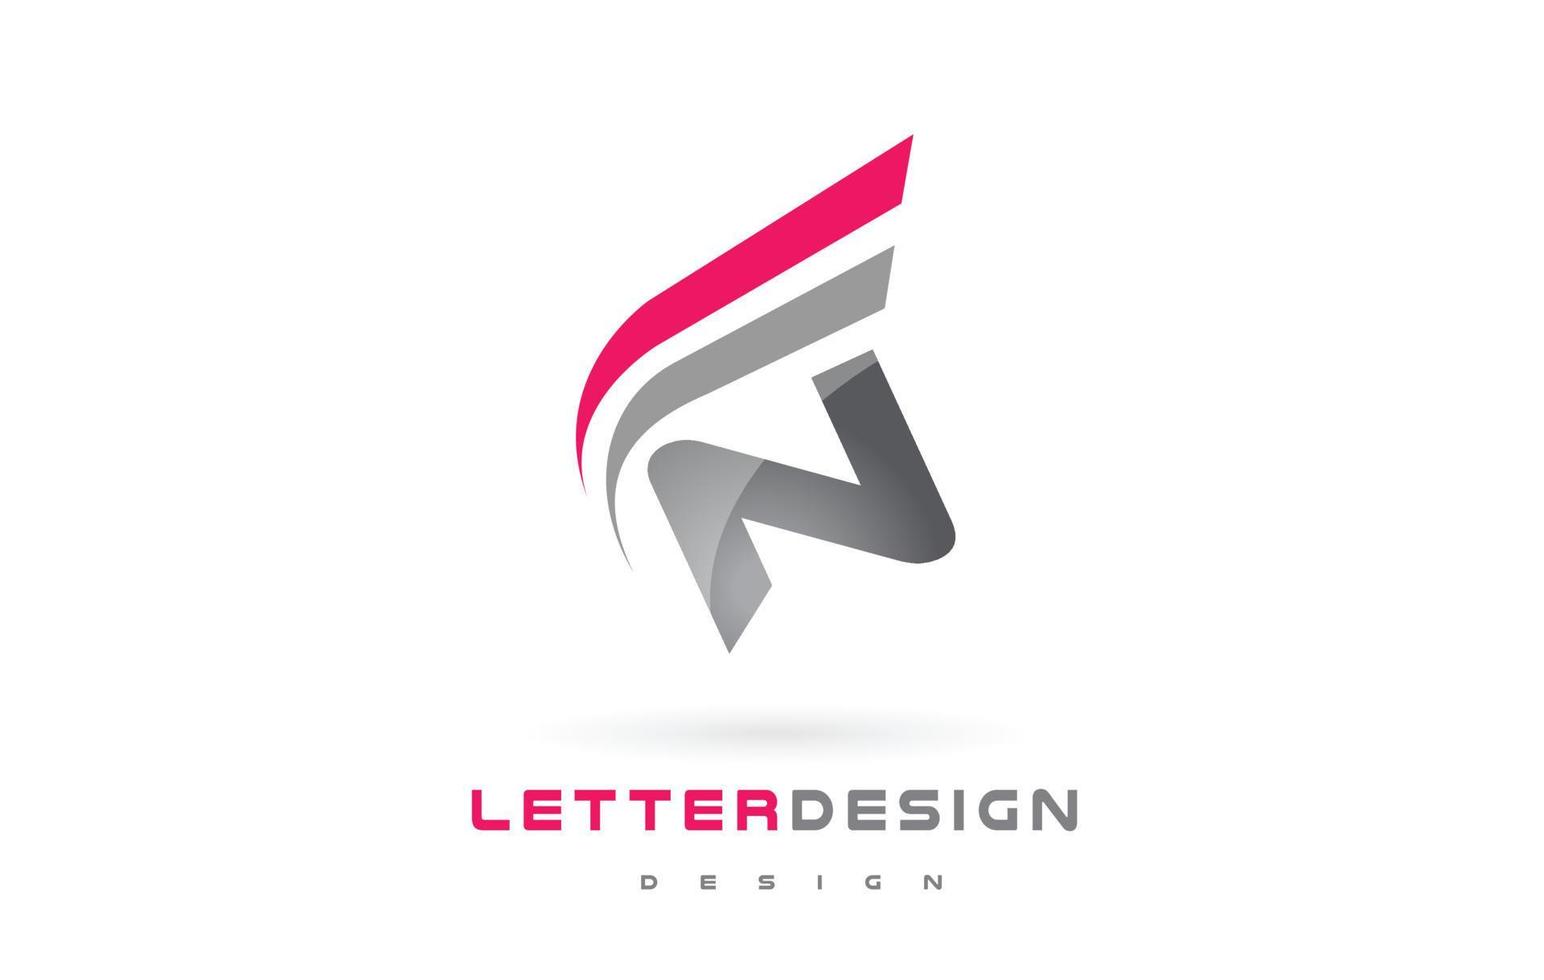 Diseño de logotipo de letra n. concepto de letras modernas futuristas. vector